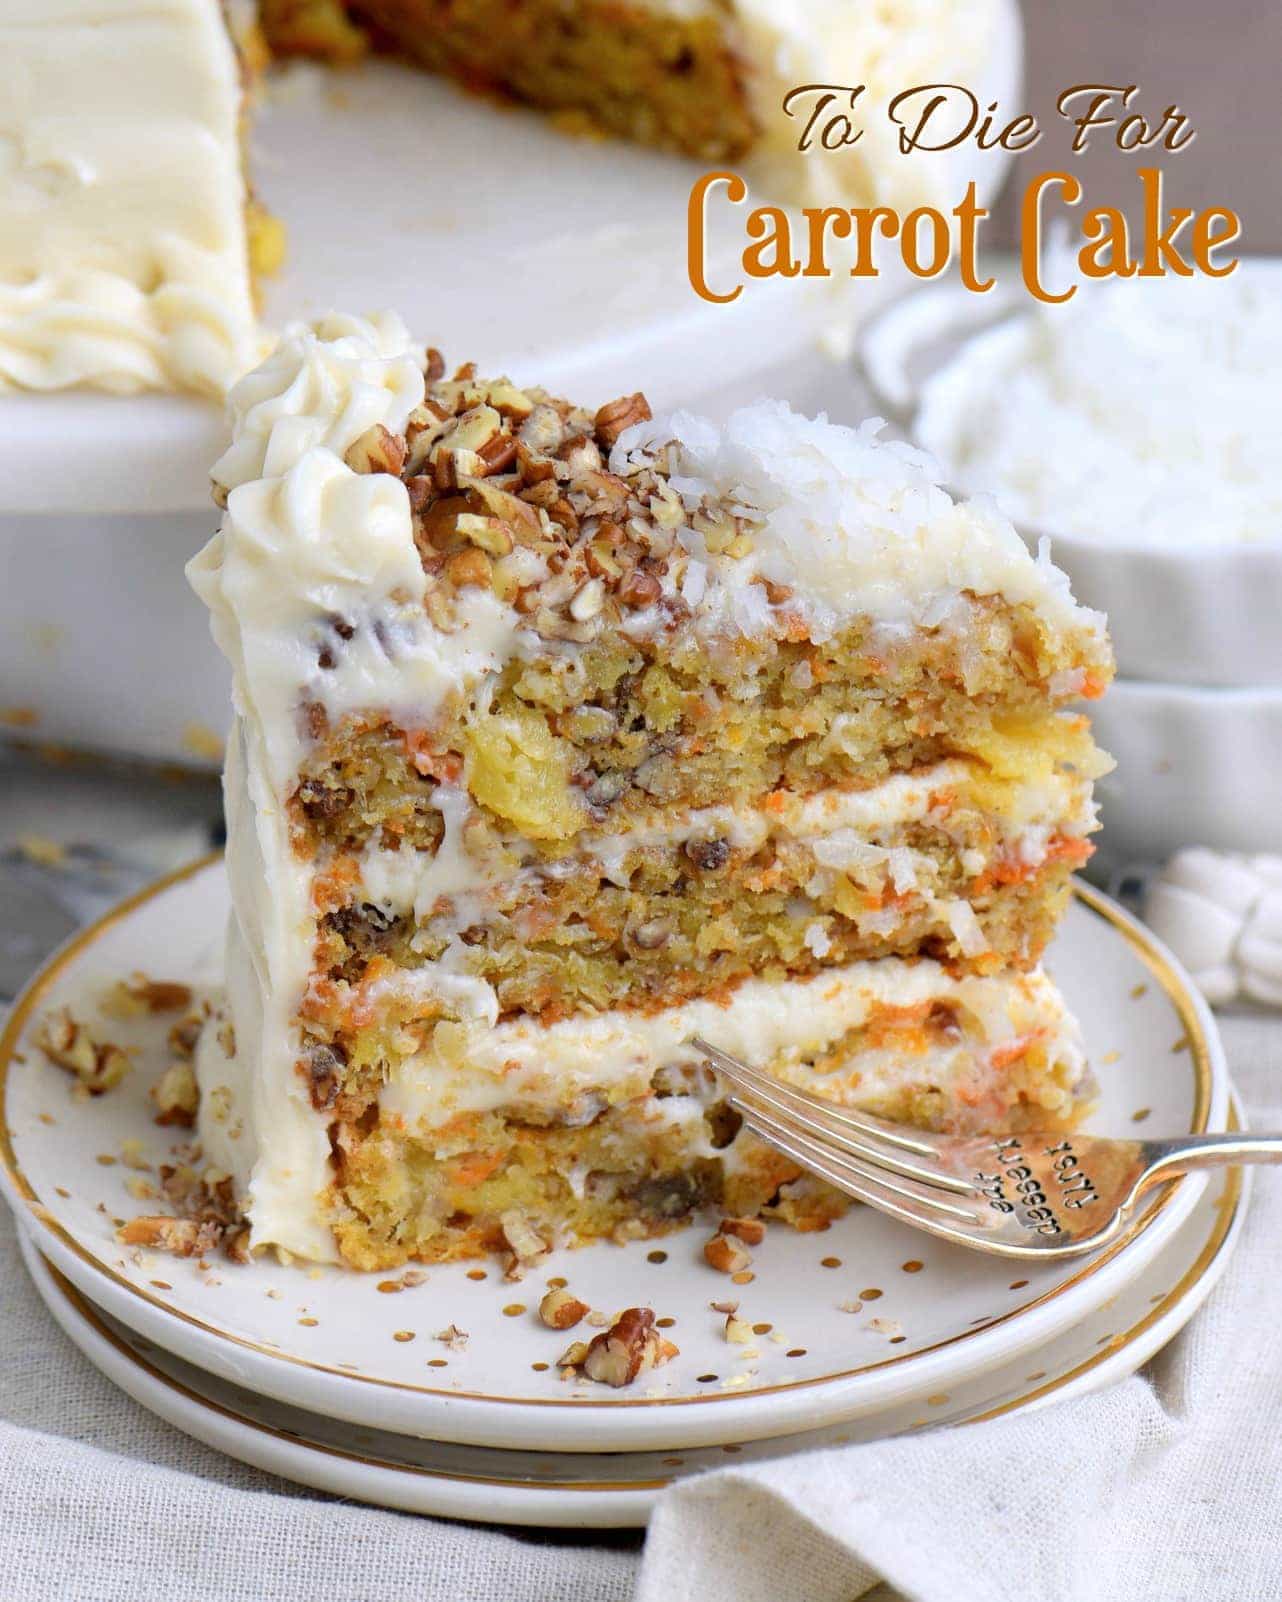 How to Grate Carrots for Carrot Cake - Always Eat Dessert